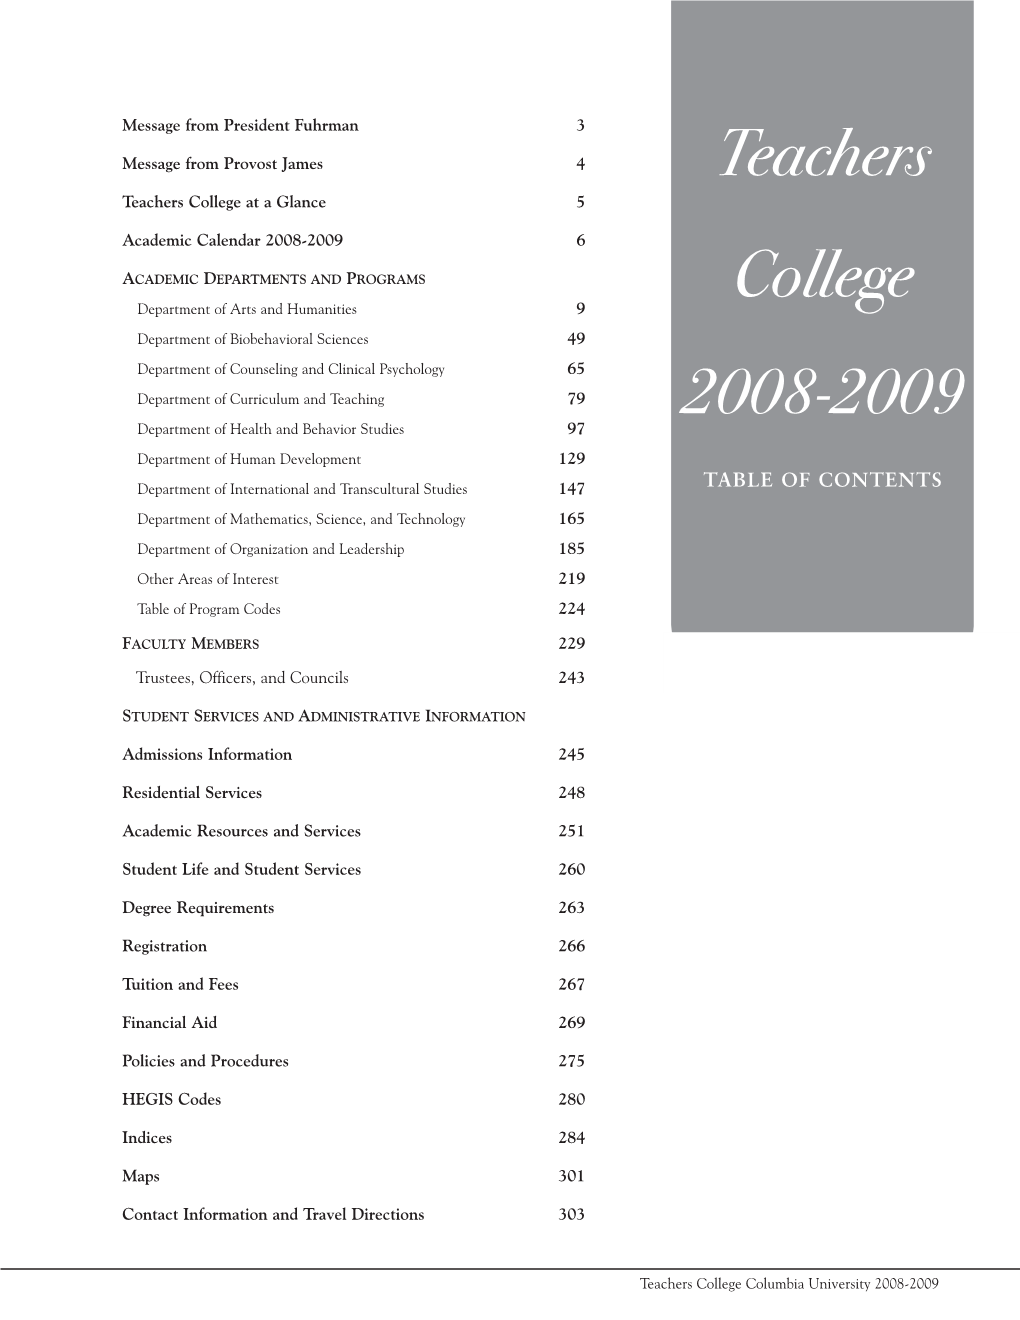 Academic Catalog 2008-2009